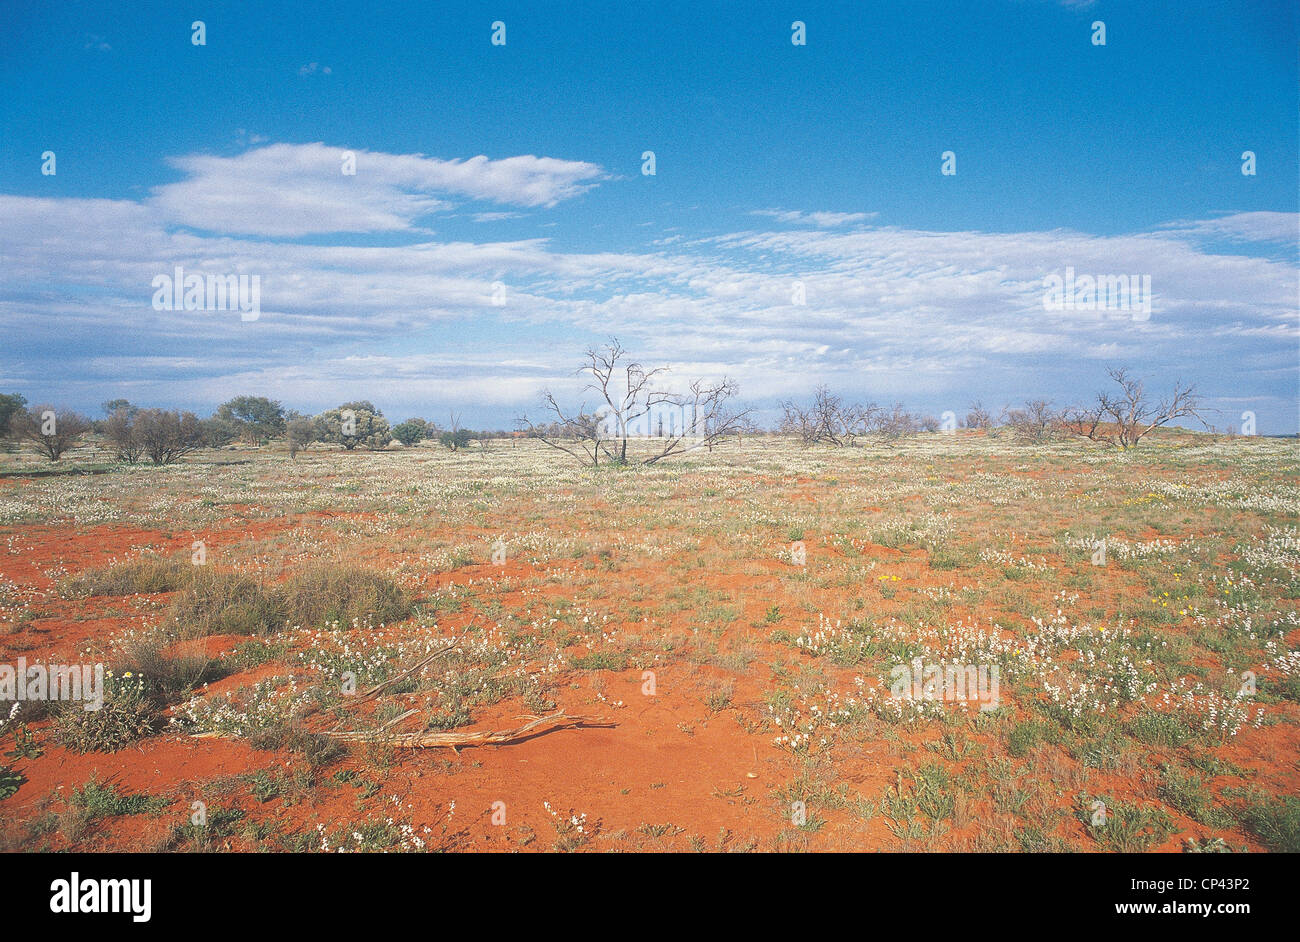 Пустыня гибсона австралия. Пустыня Гибсона в Австралии. Пустыня Гибсона. Пустыня Гибсона Западная Австралия. Фото Австралия Desert after the Rain.